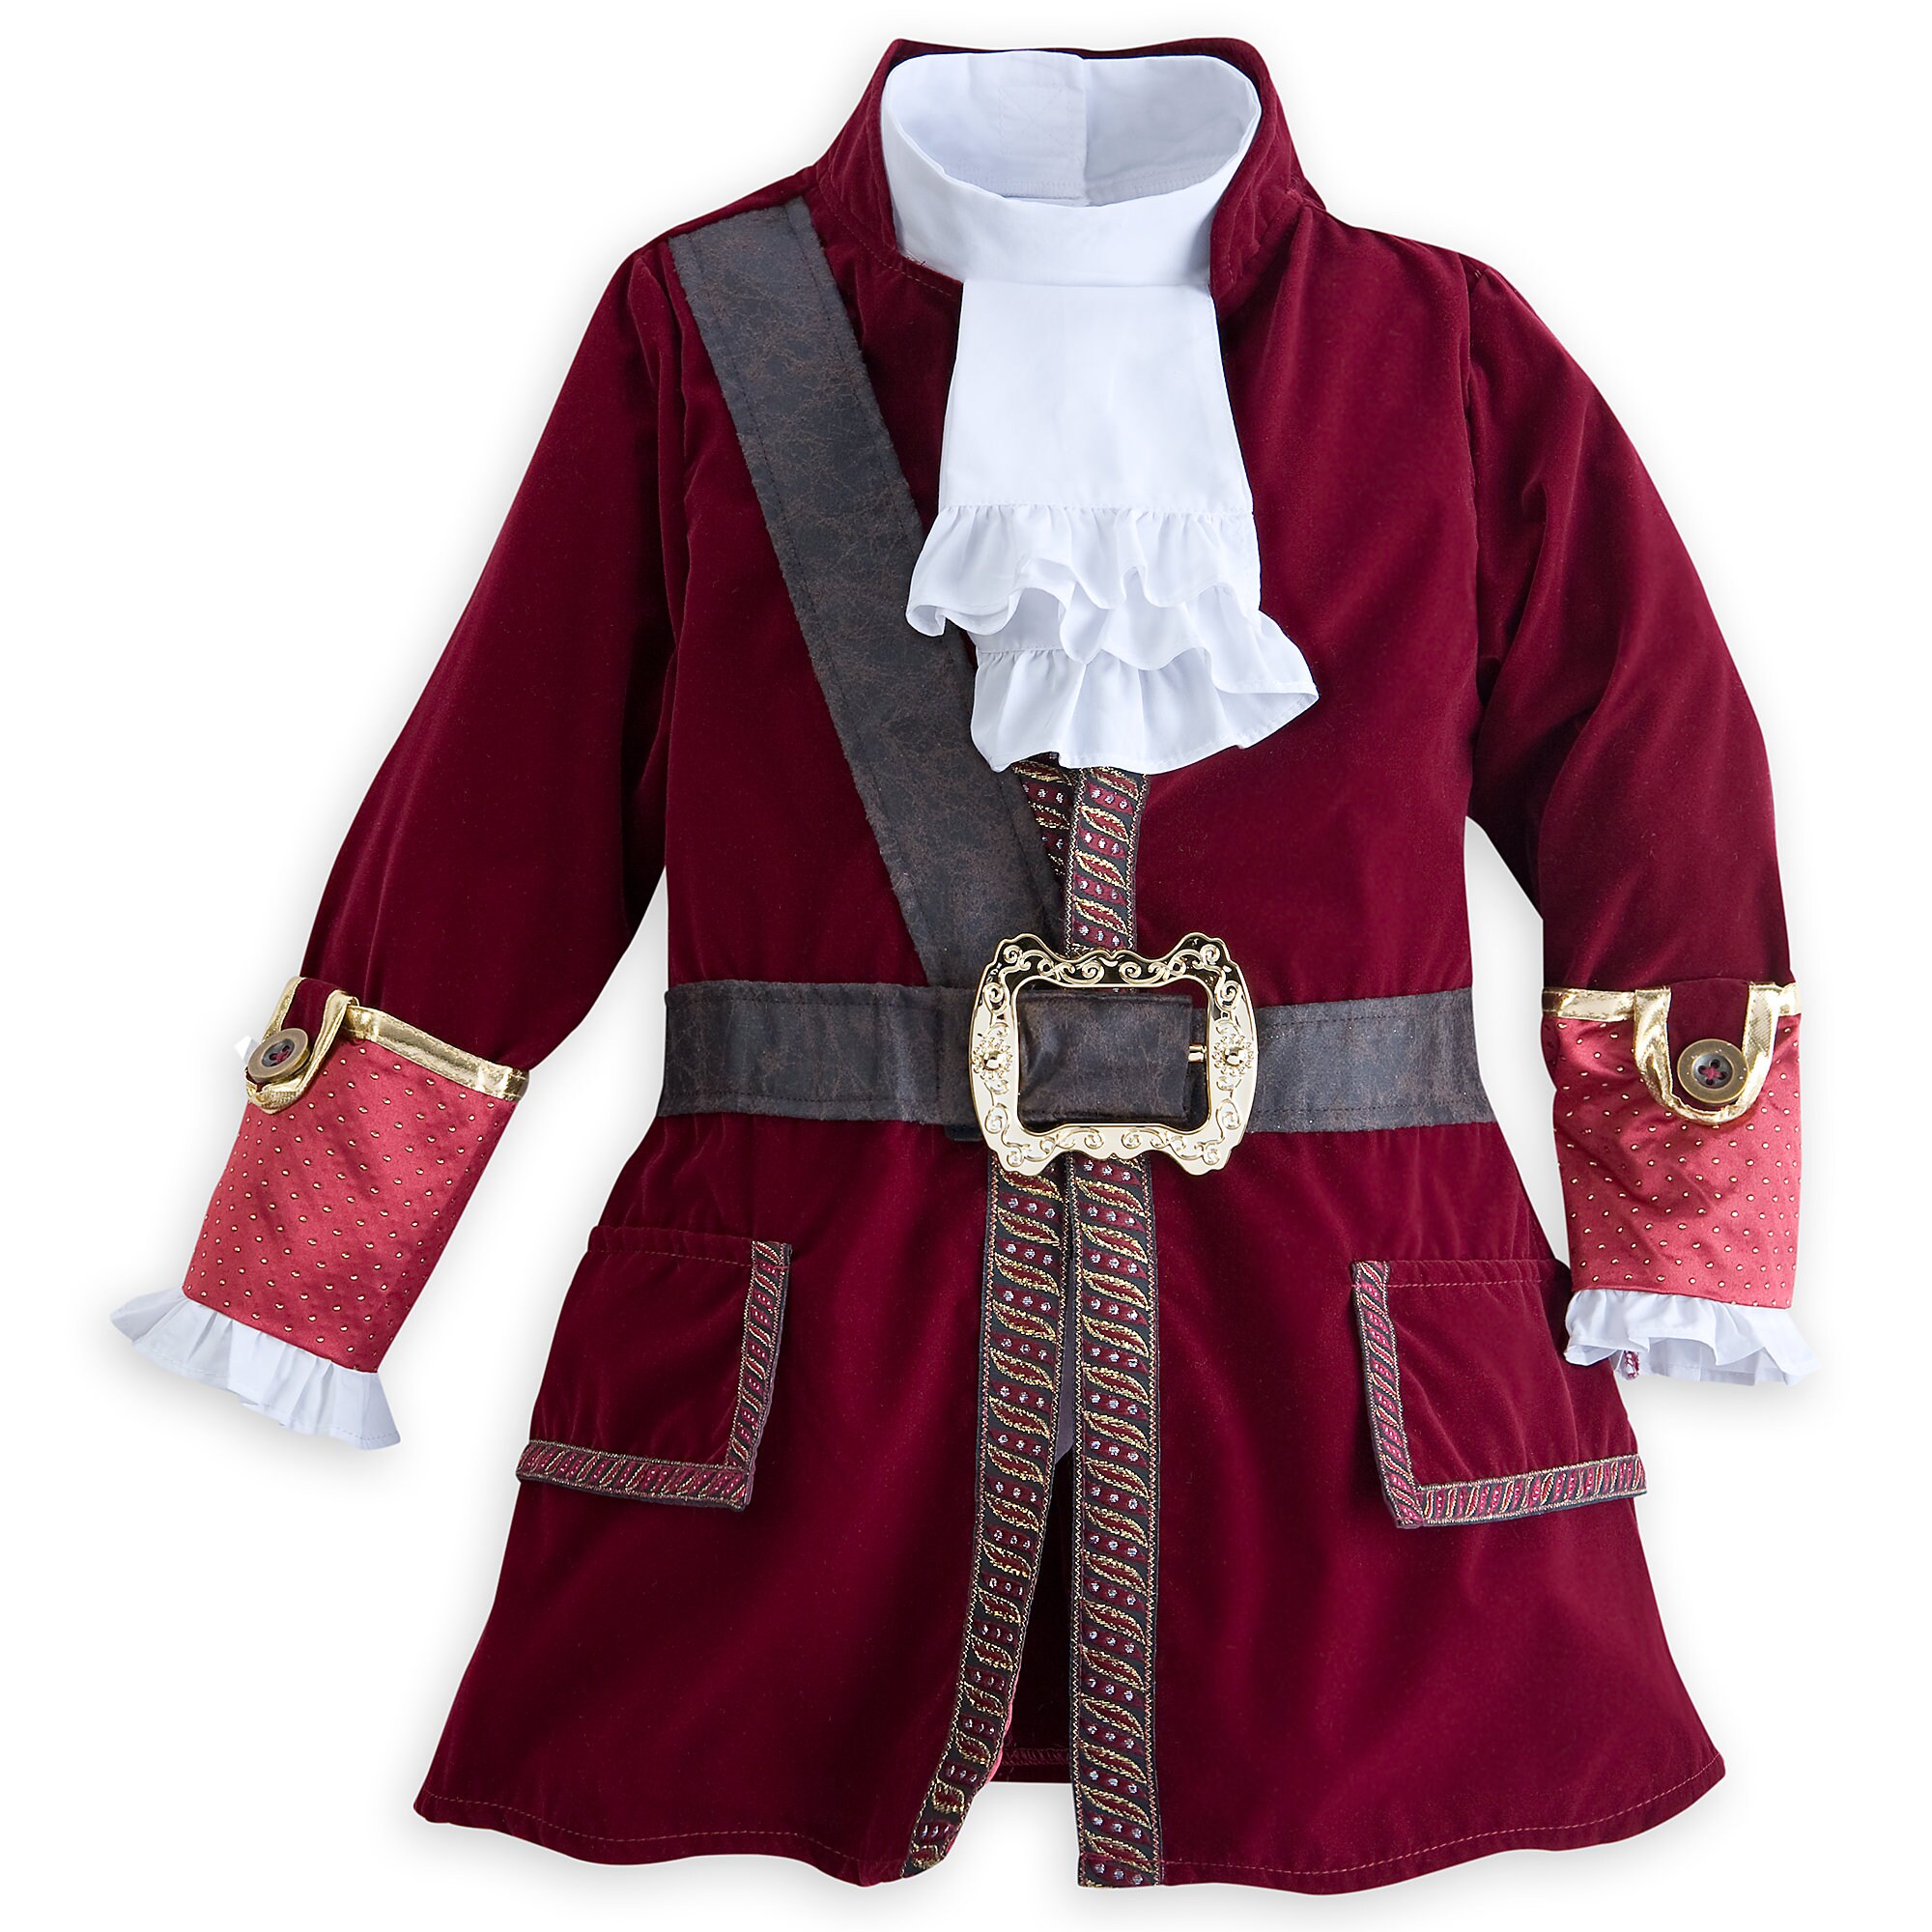 Captain Hook Costume for Kids - Peter Pan